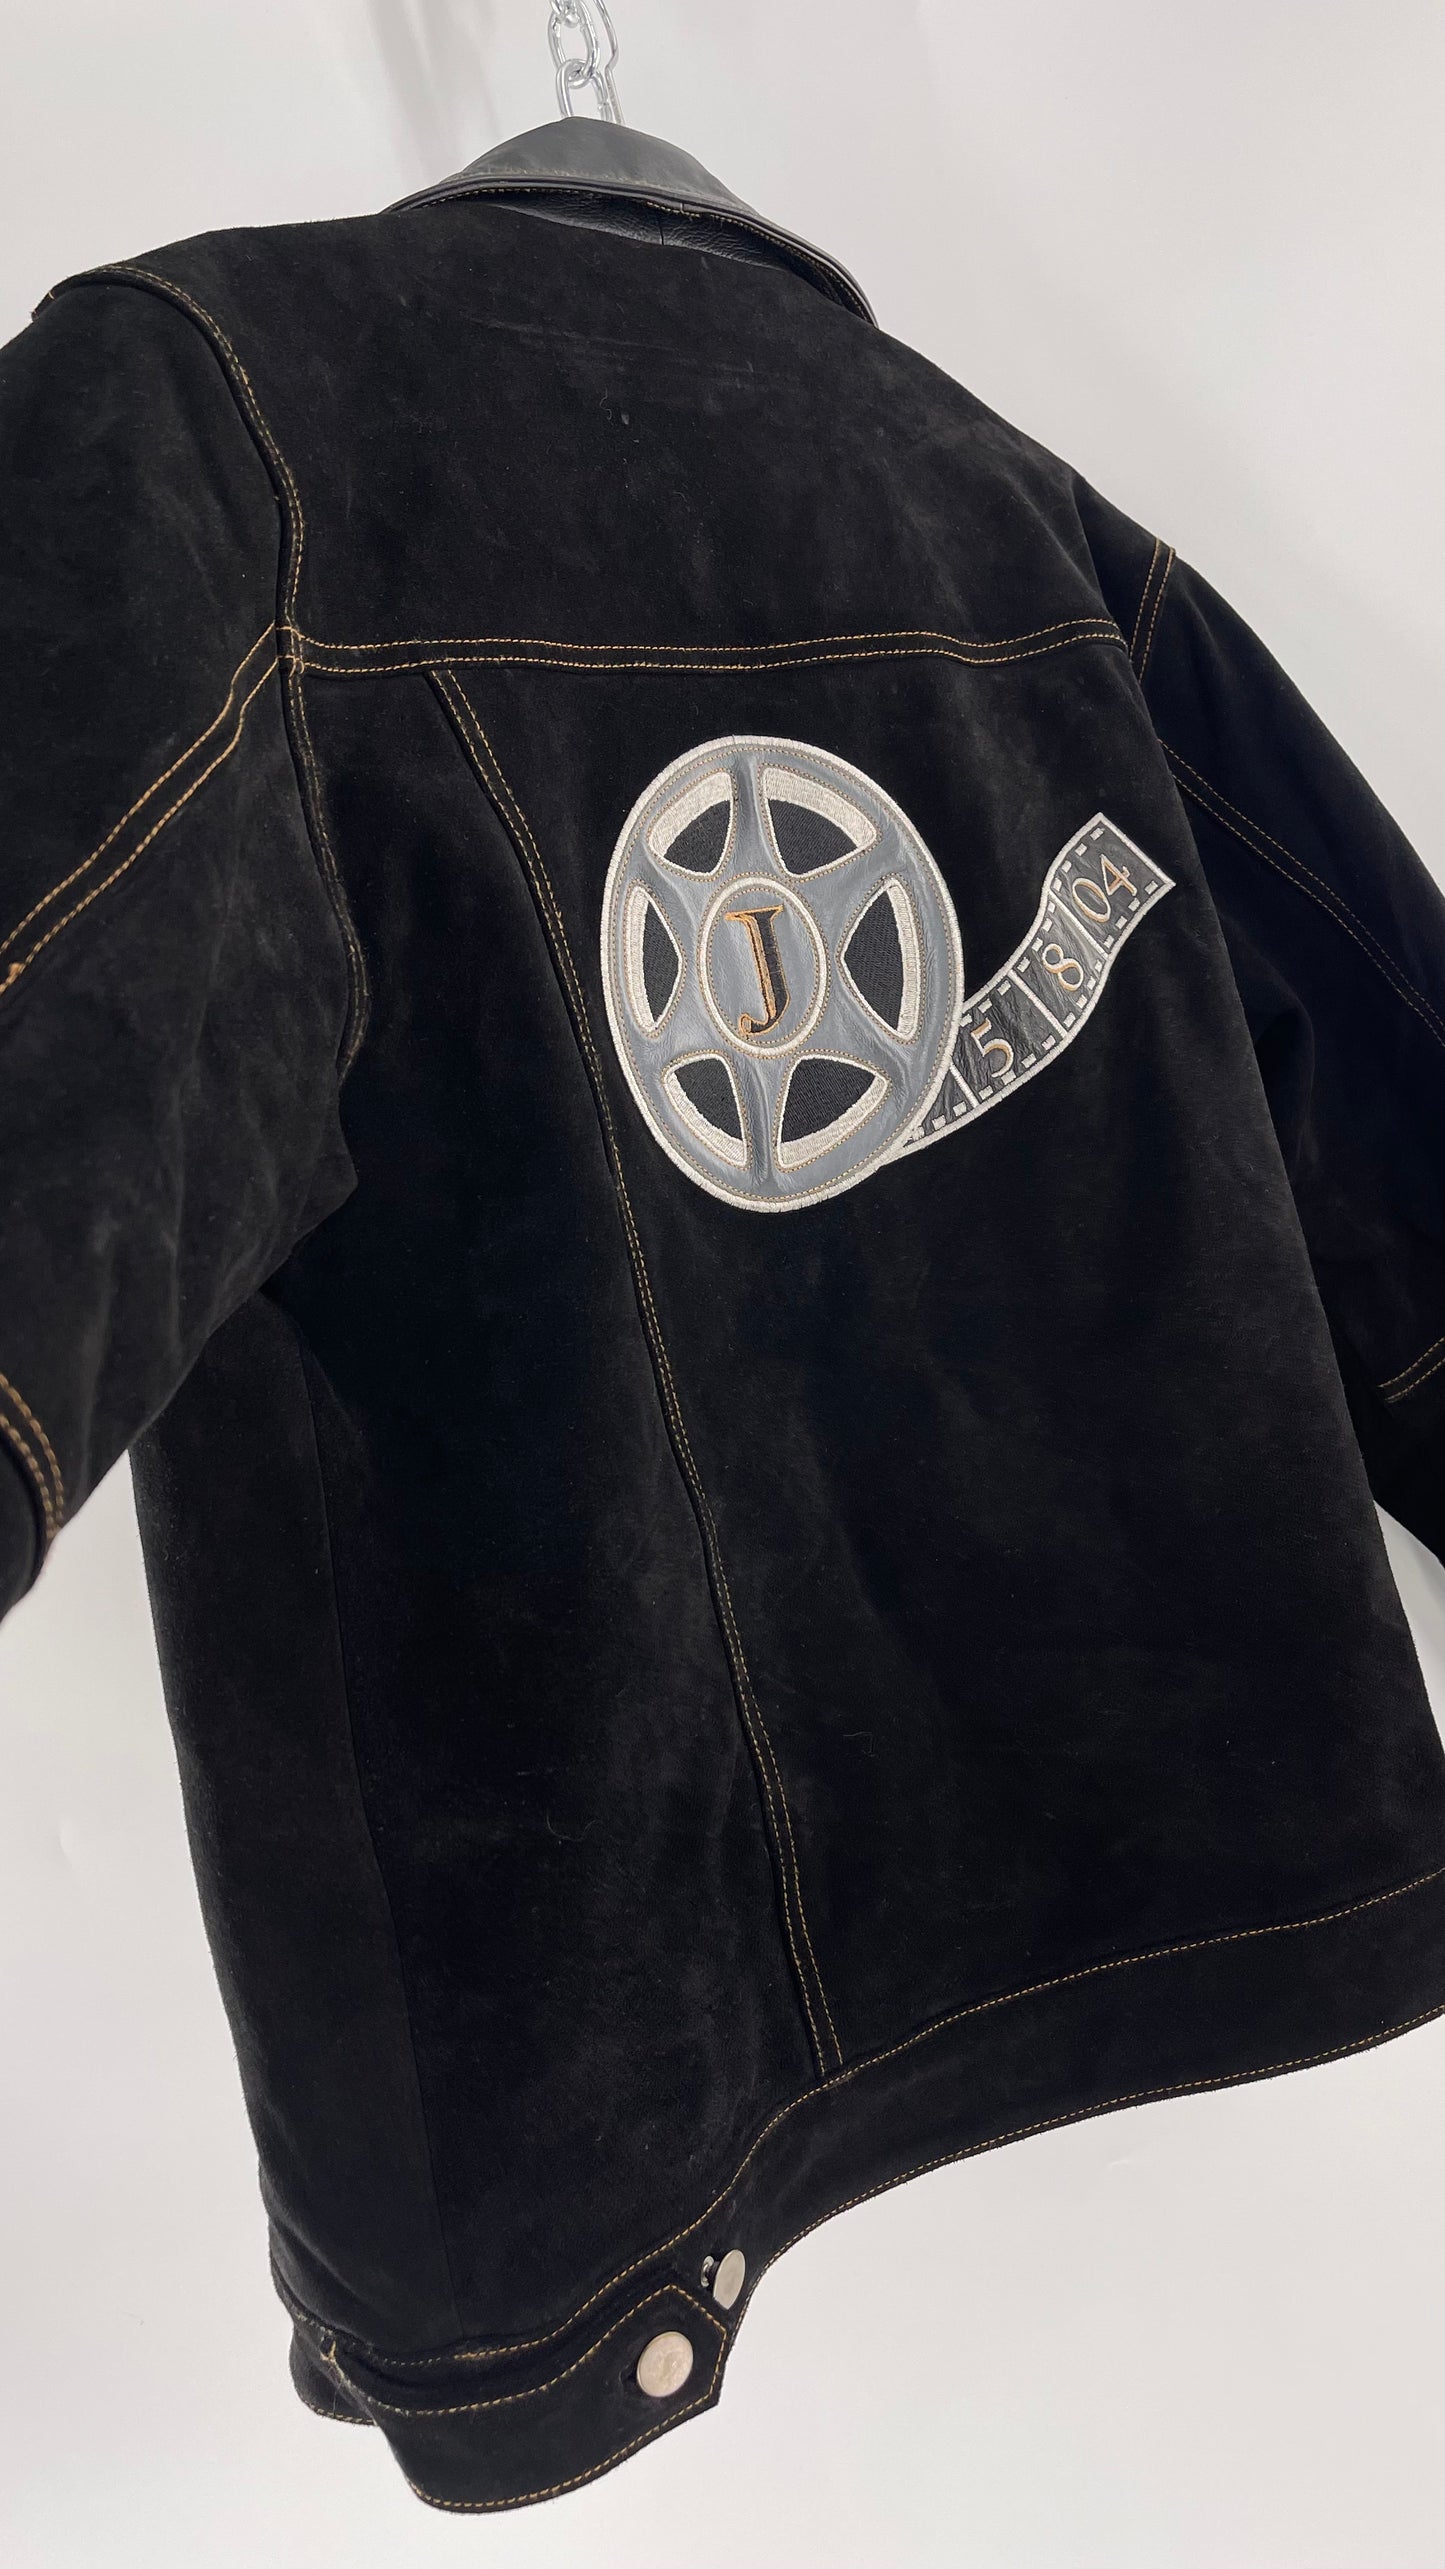 Vintage Extreme Black Suede Heavy Duty Cinematic Jacket (Medium)